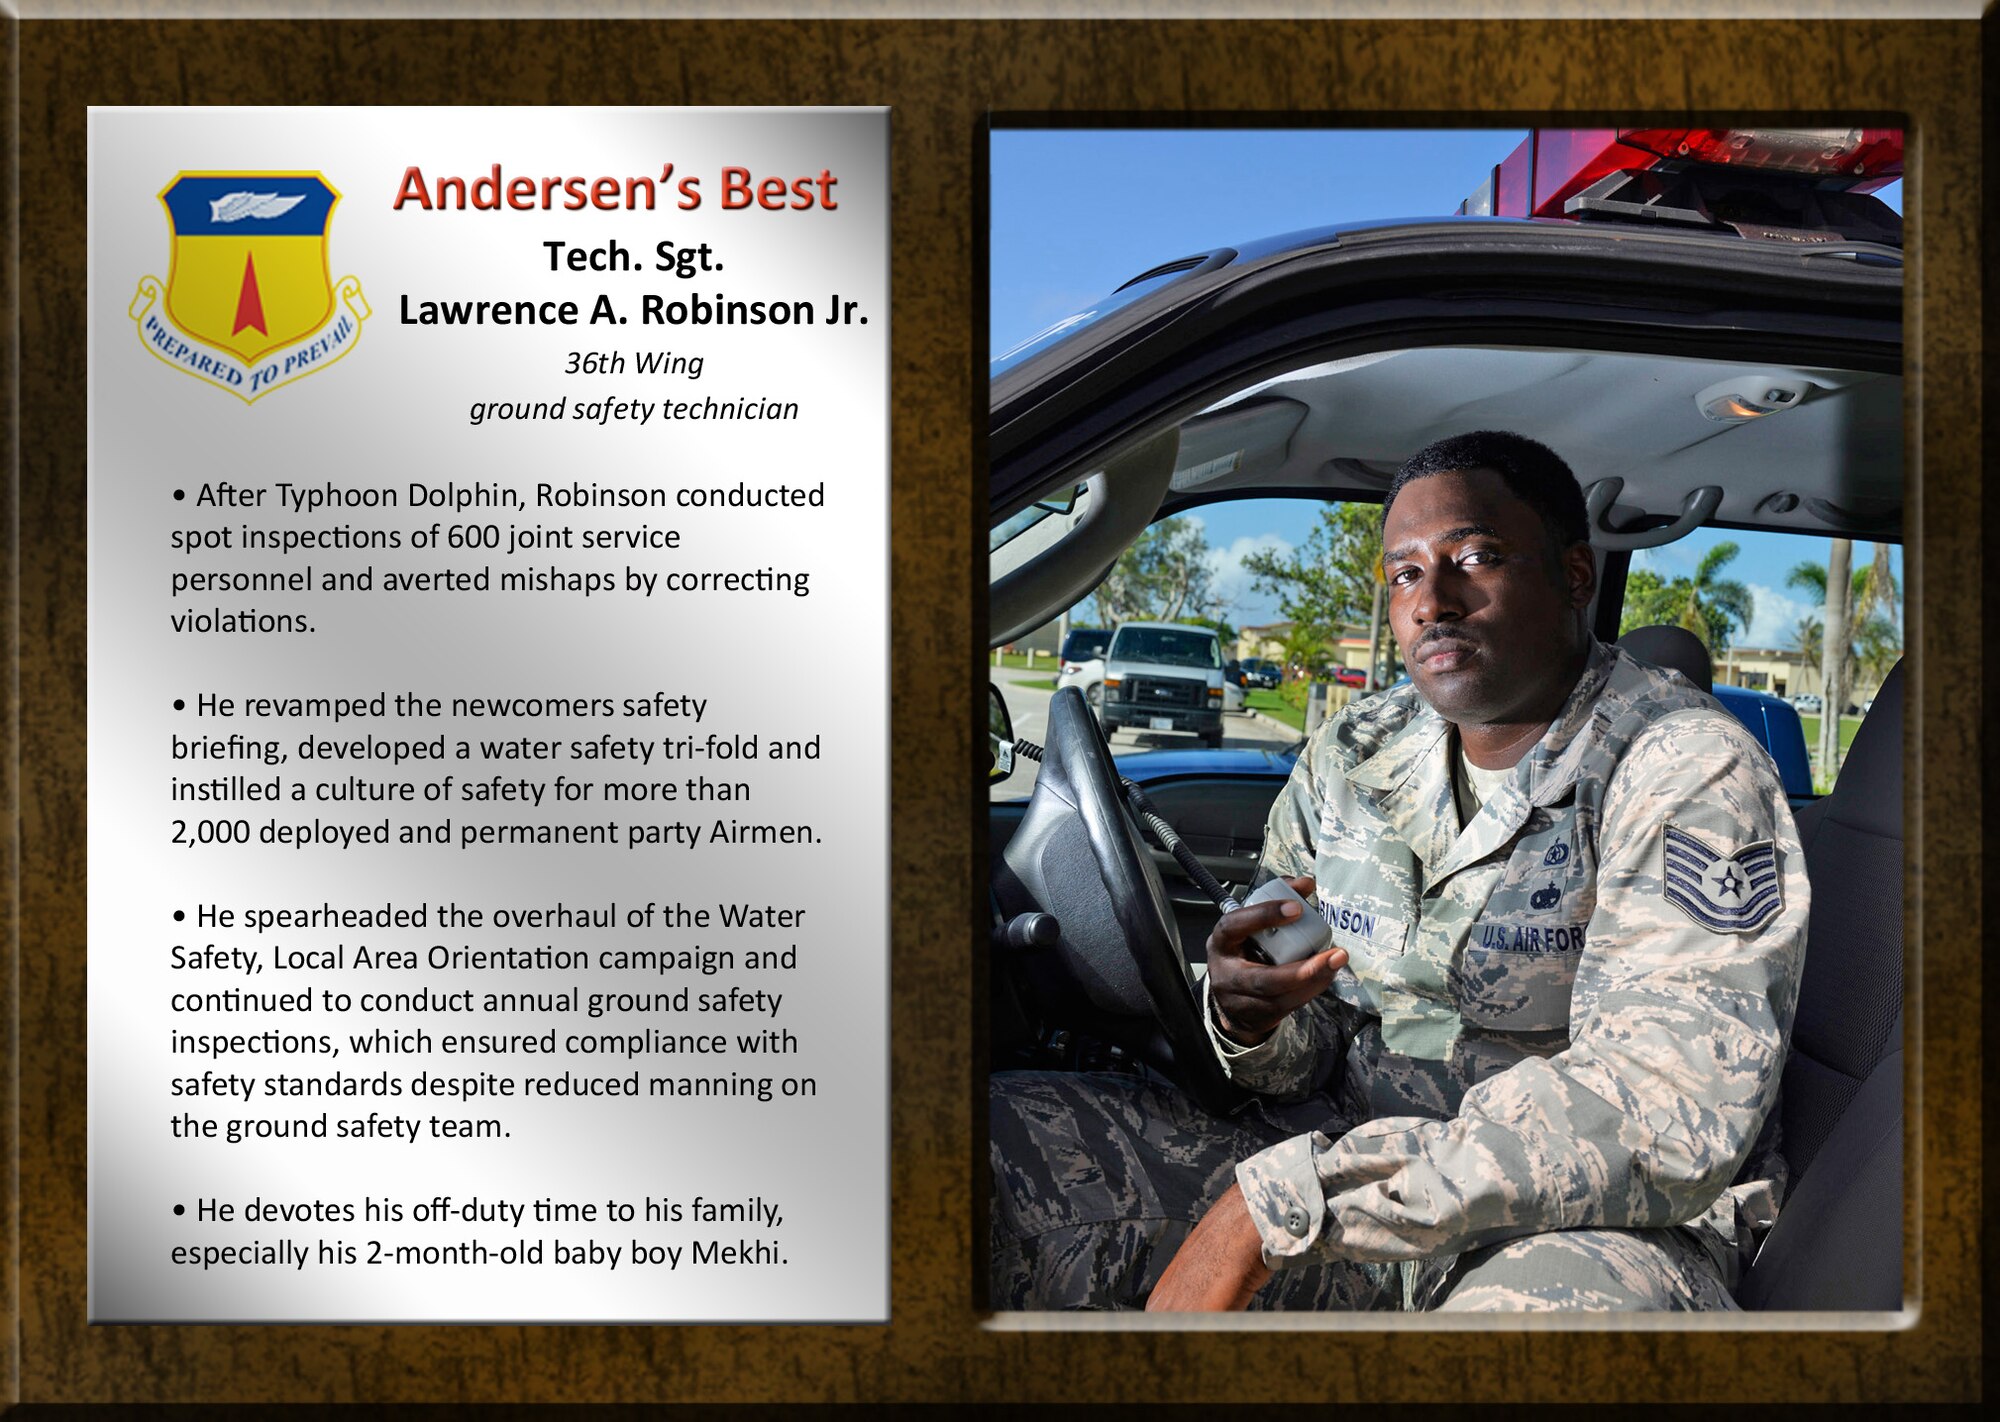 Team Andersen's Best: Tech. Sgt. Lawrence A. Robinson Jr.